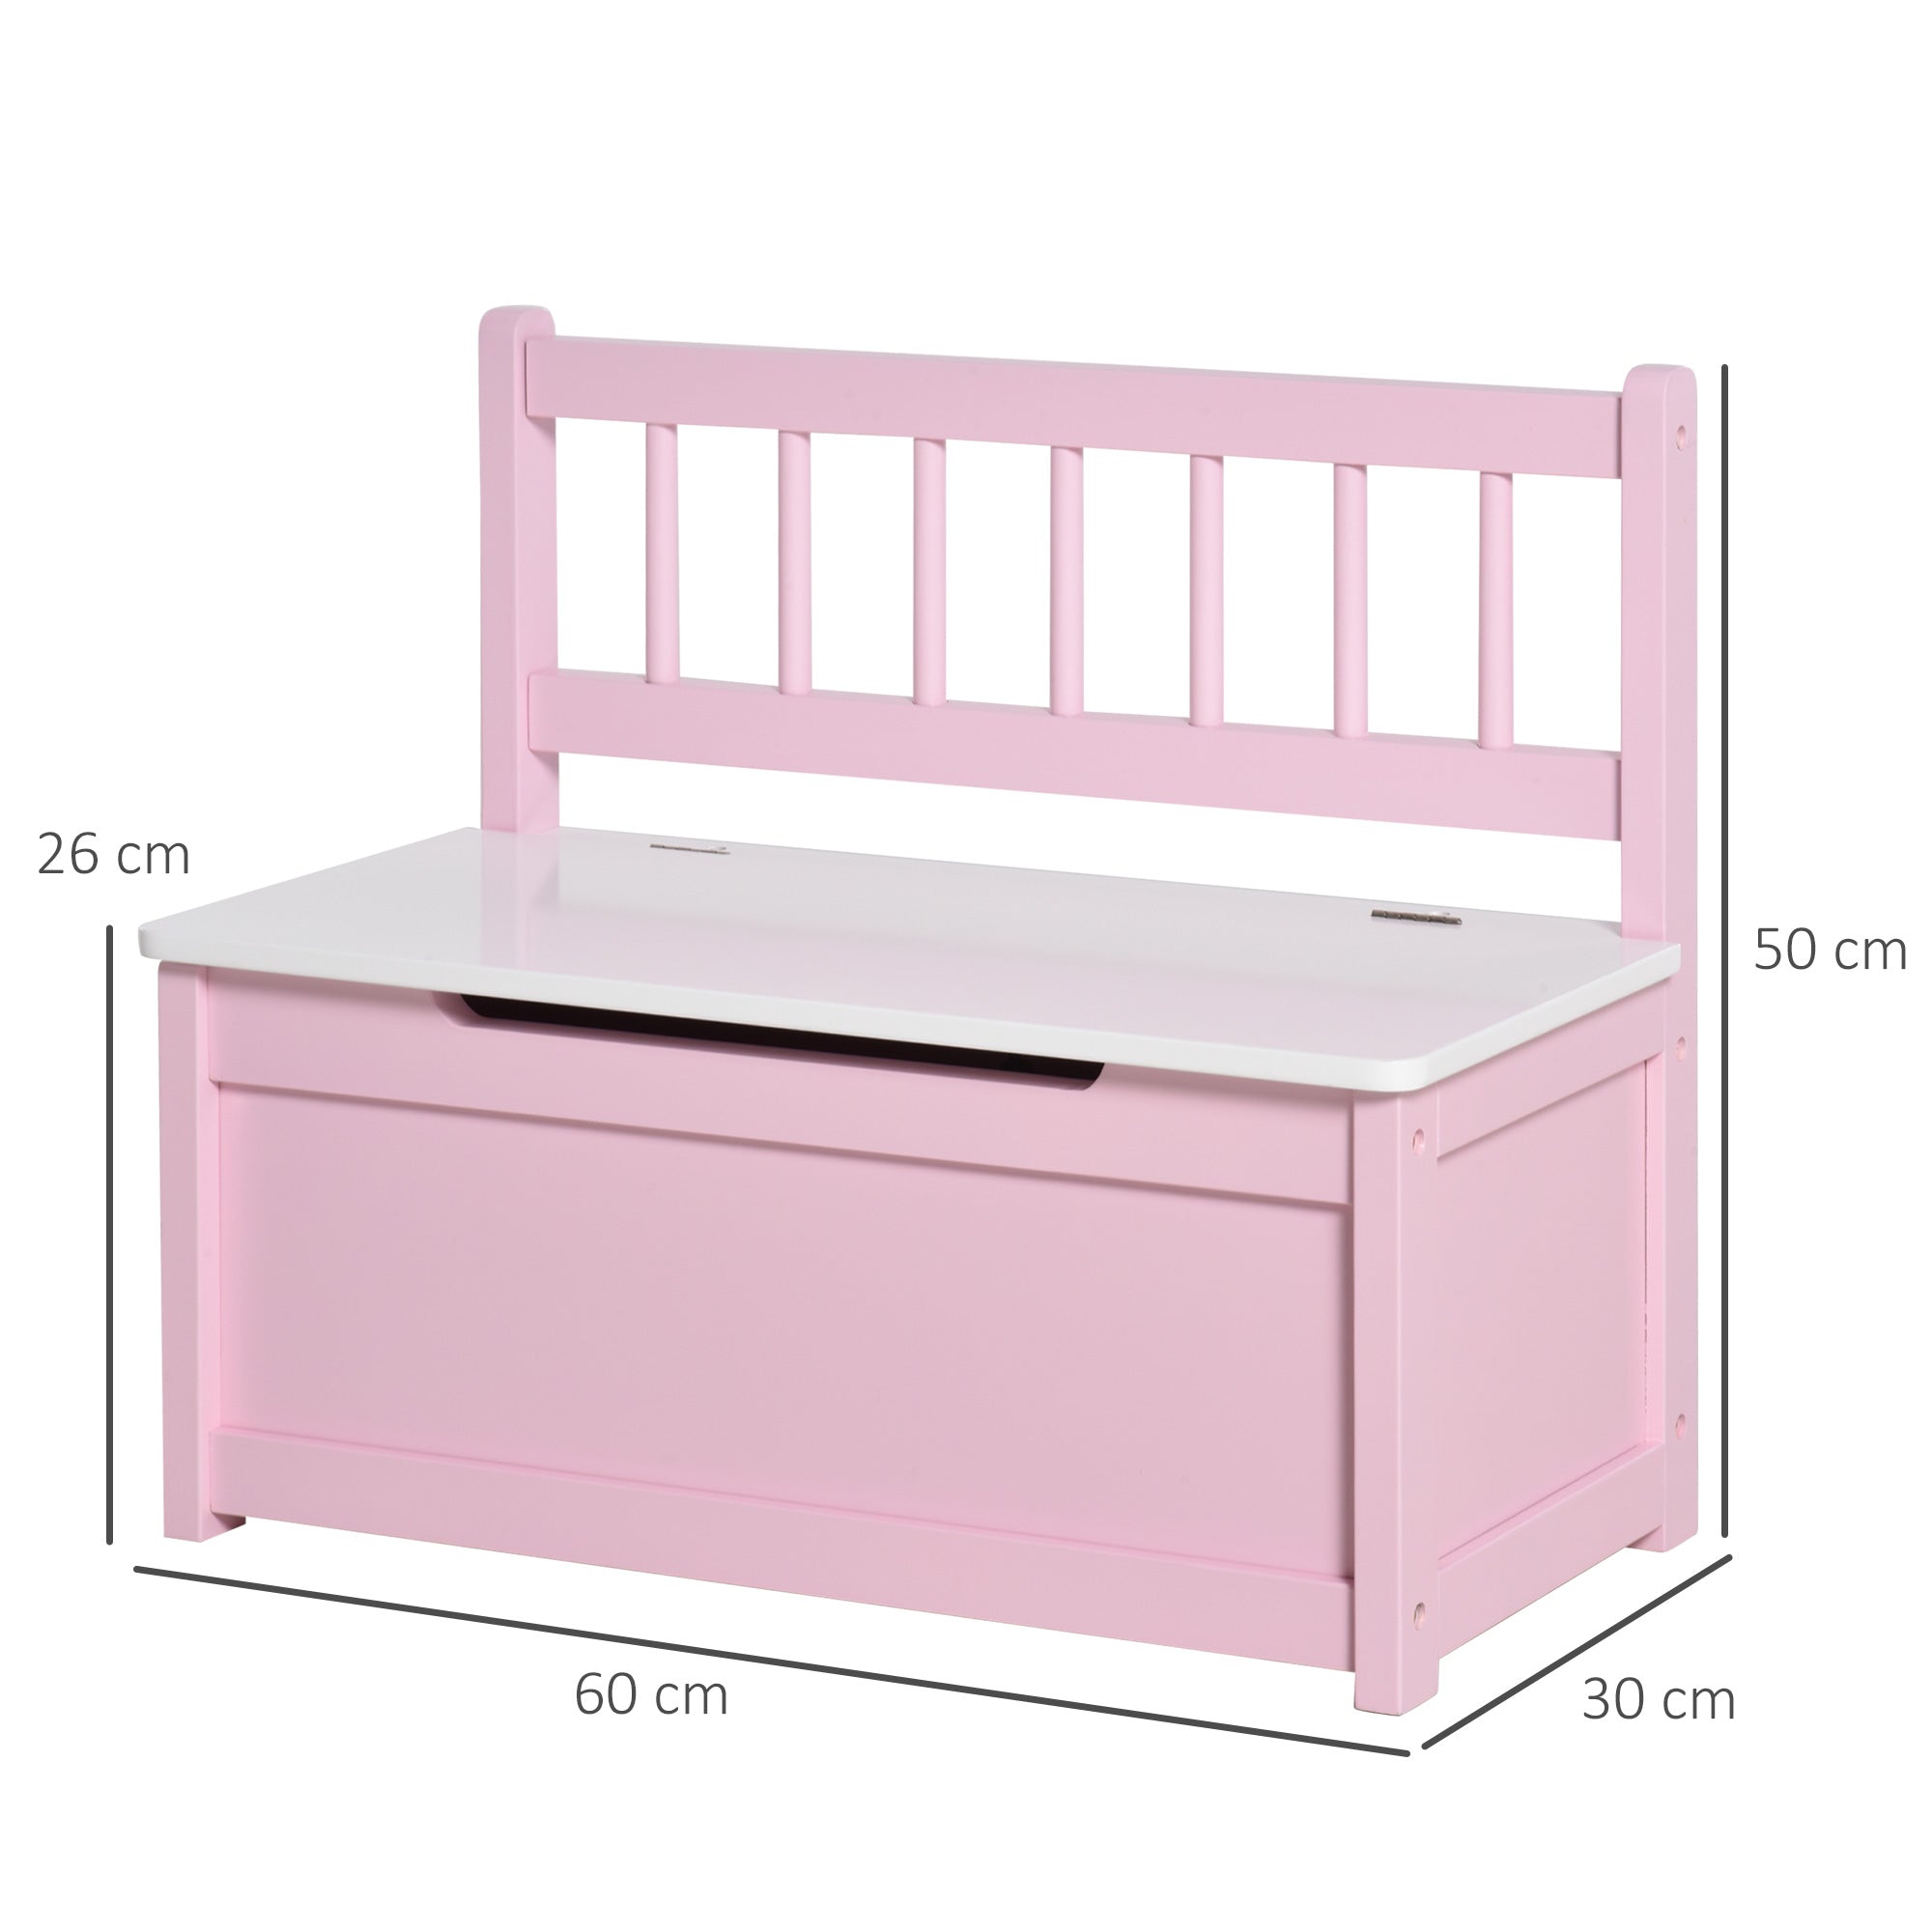 2-IN-1 Wooden Toy Box Kids Seat Bench Storage Chest Cabinet Organizer with Safety Pneumatic Rod 60 x 30 x 50cm Pink-2